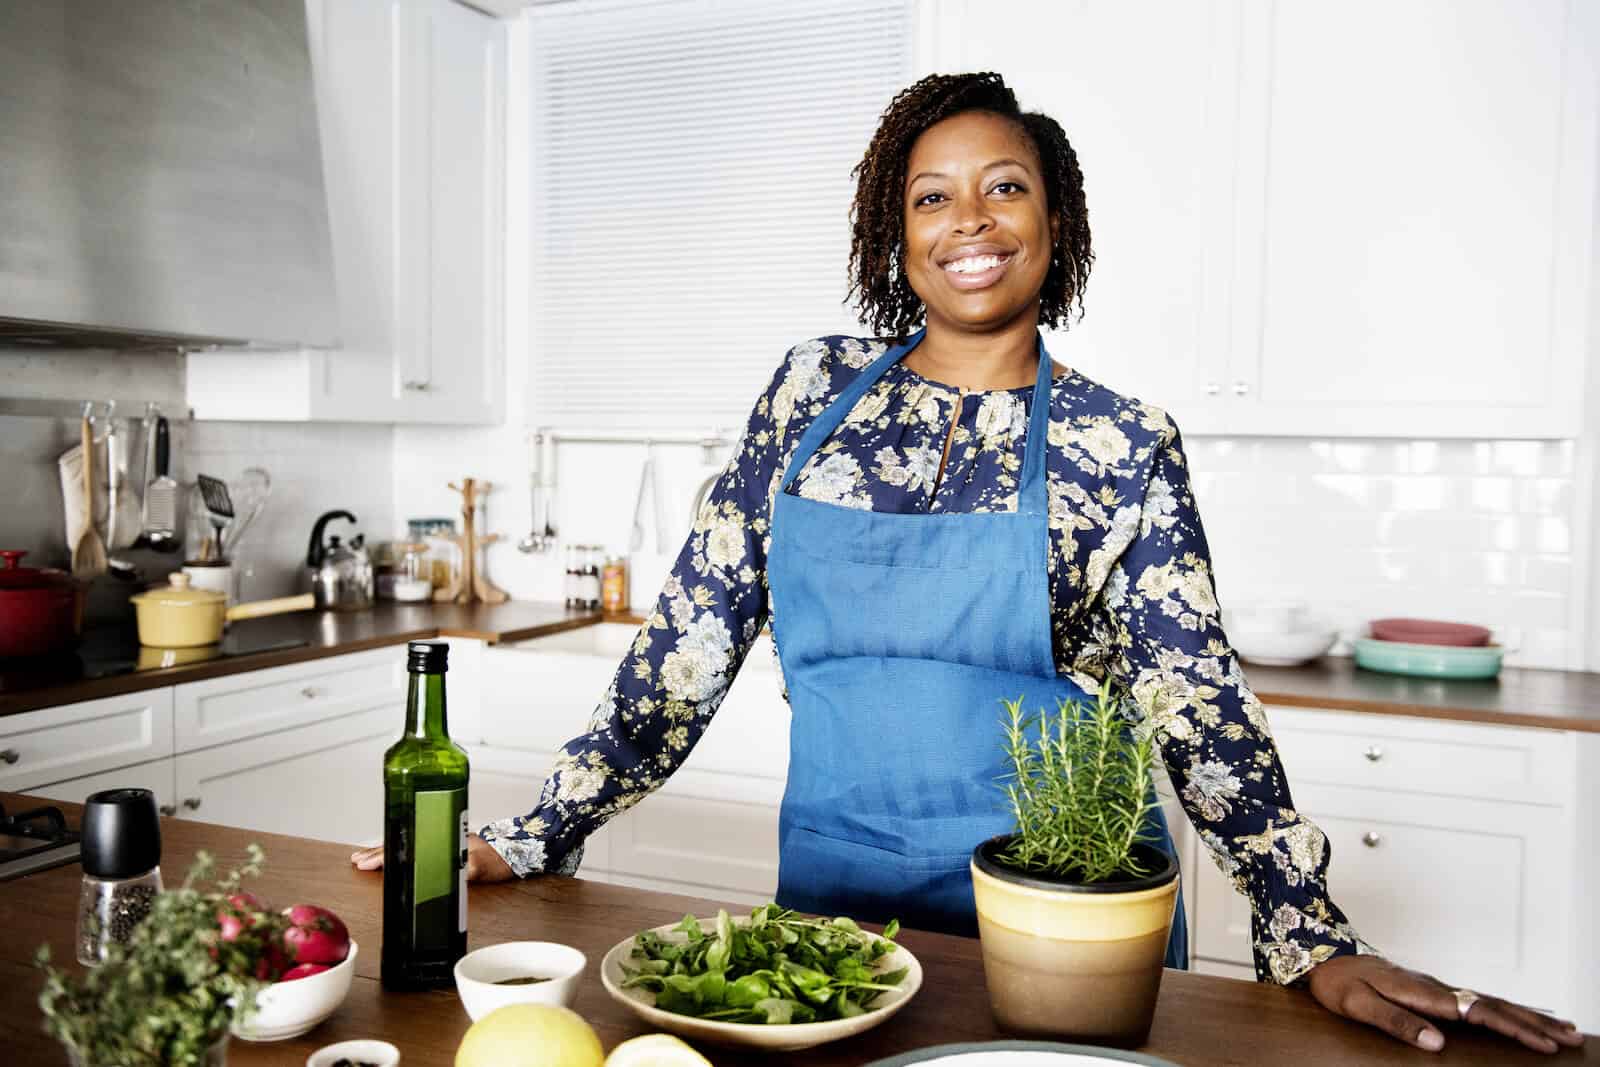 PCOS diet: happy woman preparing food in her kitchen